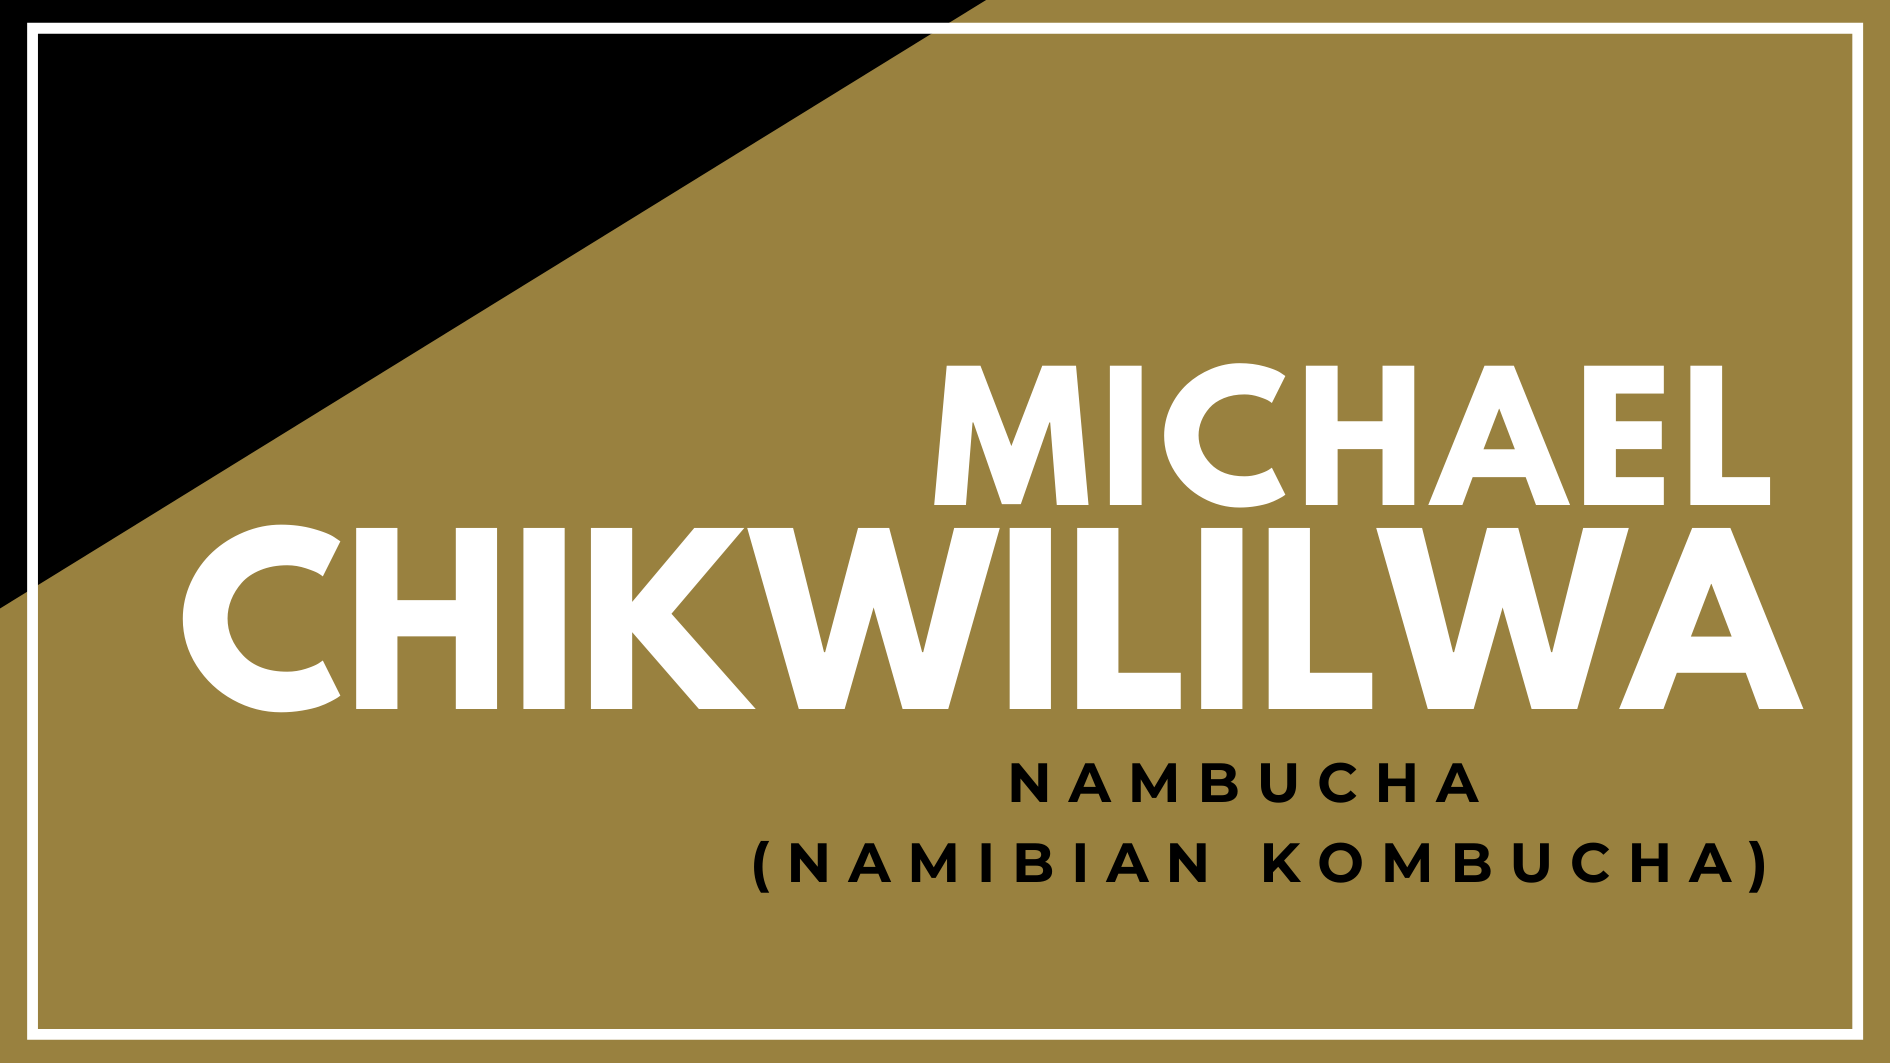 Michael Chikwililwa